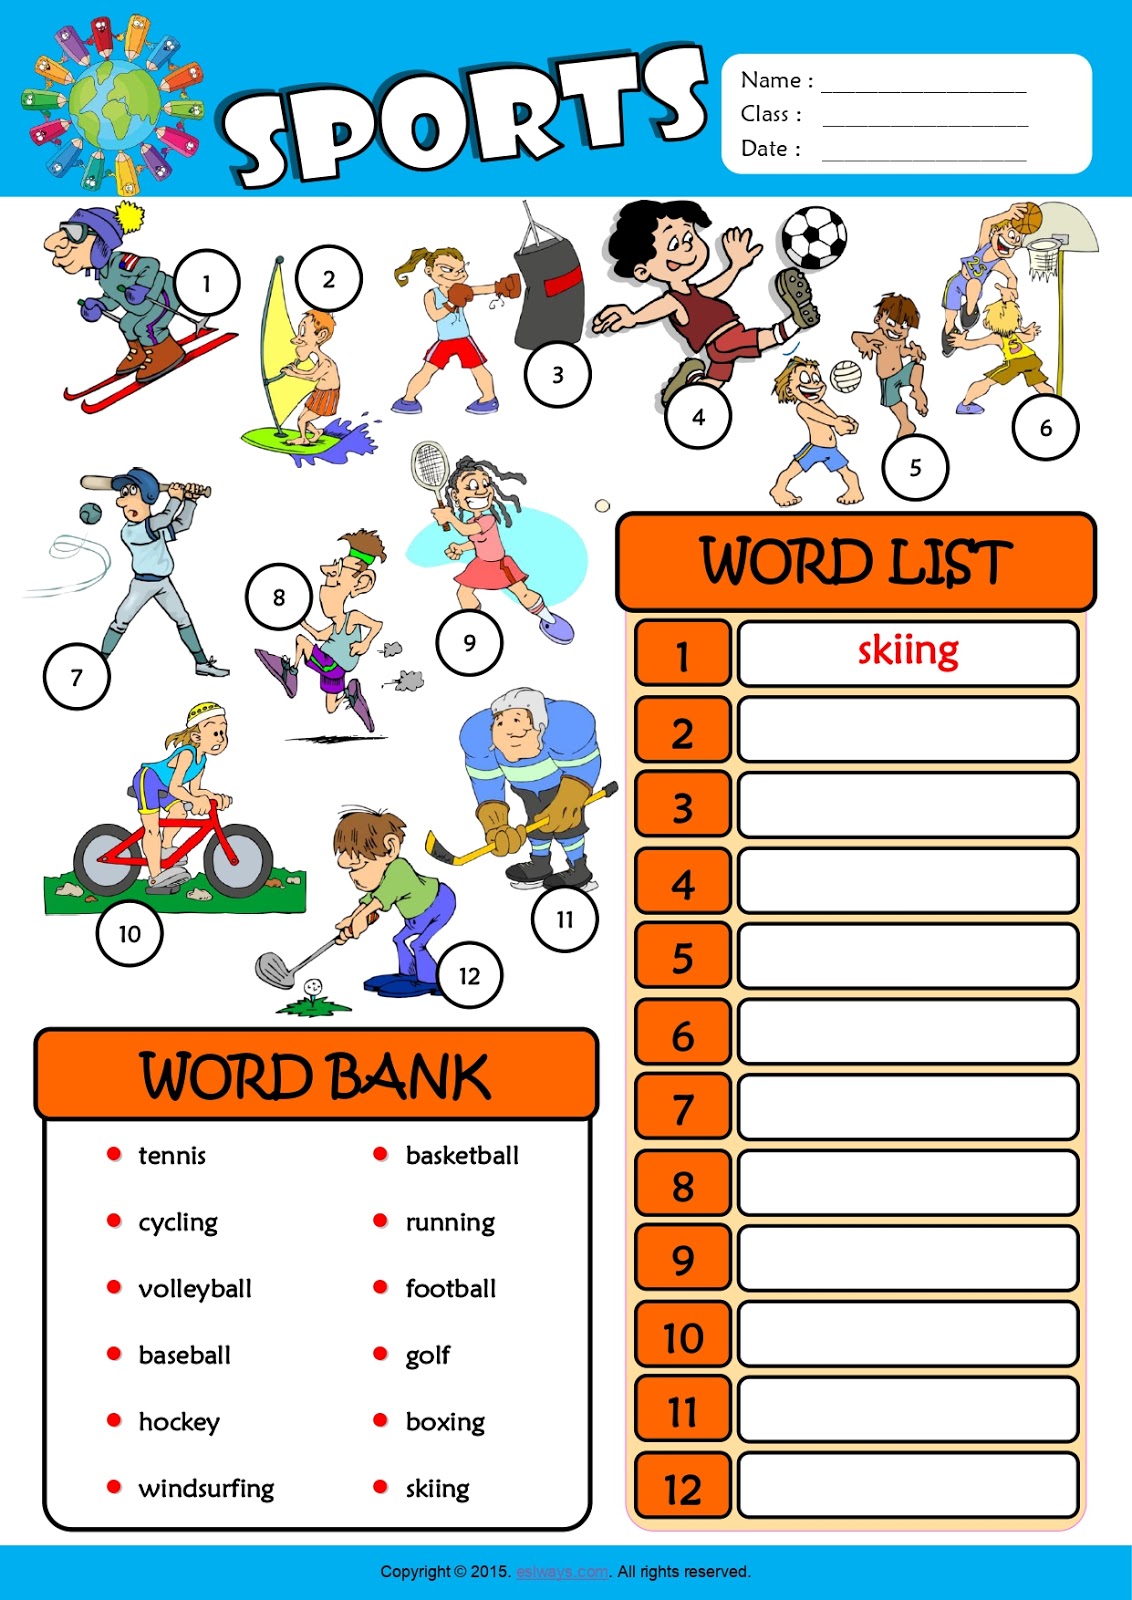 Sport 4 класс английский. Спорт Worksheets. Спорт Worksheet for Kids. Спортивные игры Worksheets. Sports for Kids задания.